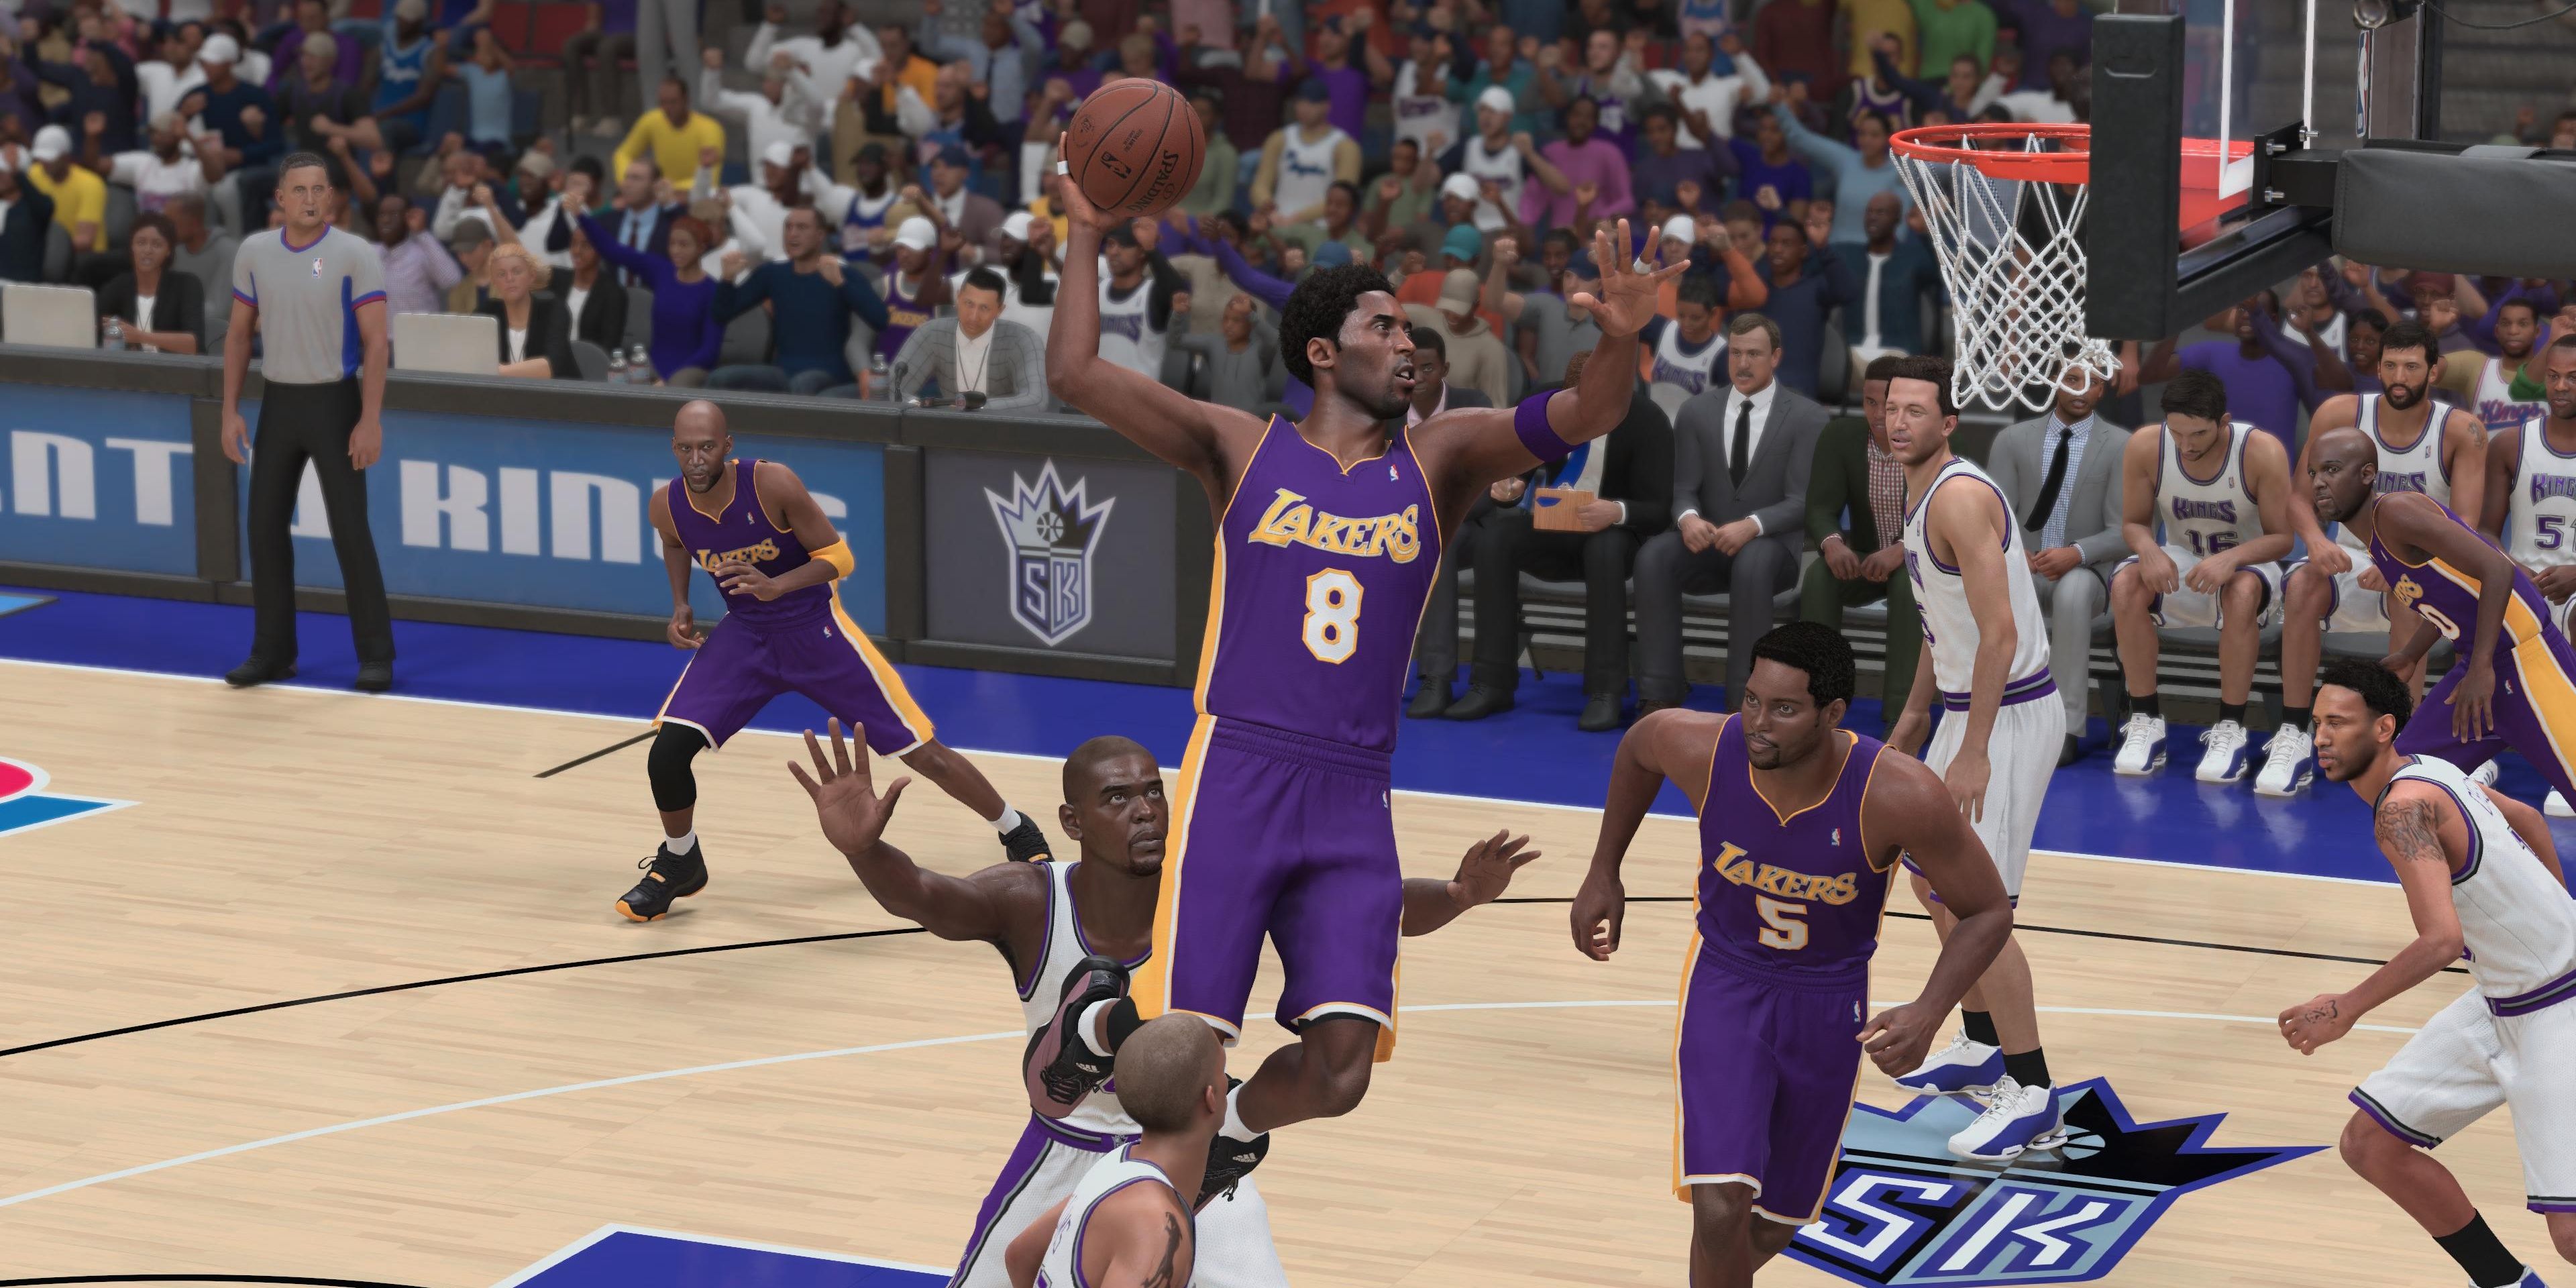 Kobe Bryant dunking on the Kings